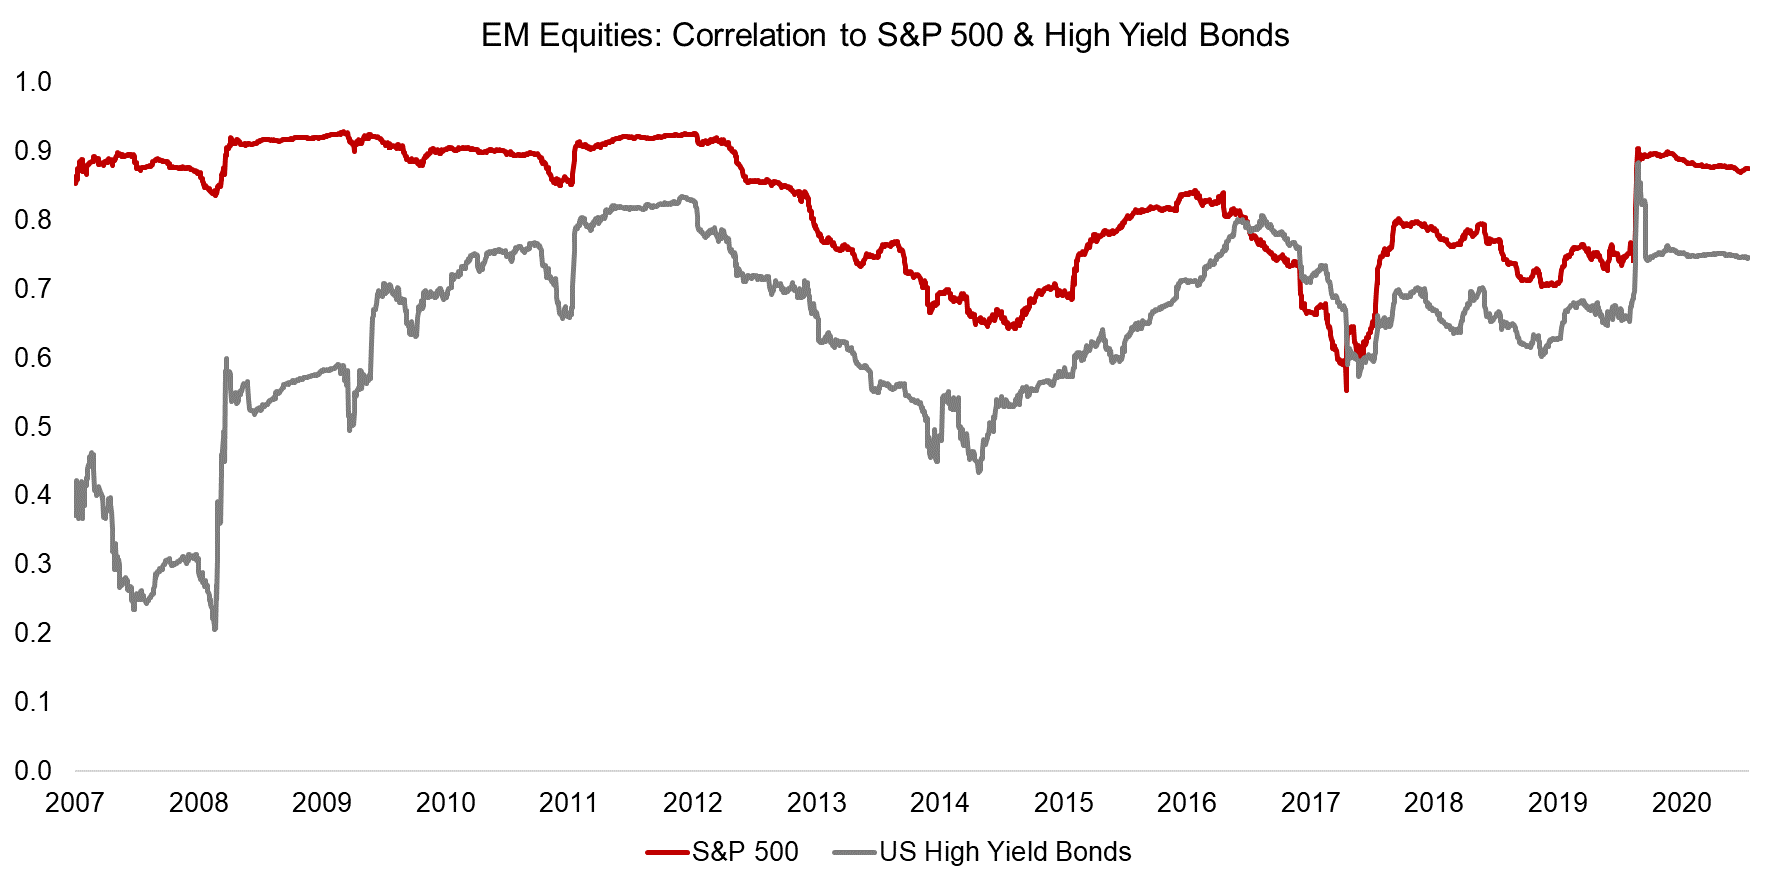 EM Equities Correlation to S&P 500 & High Yield Bonds